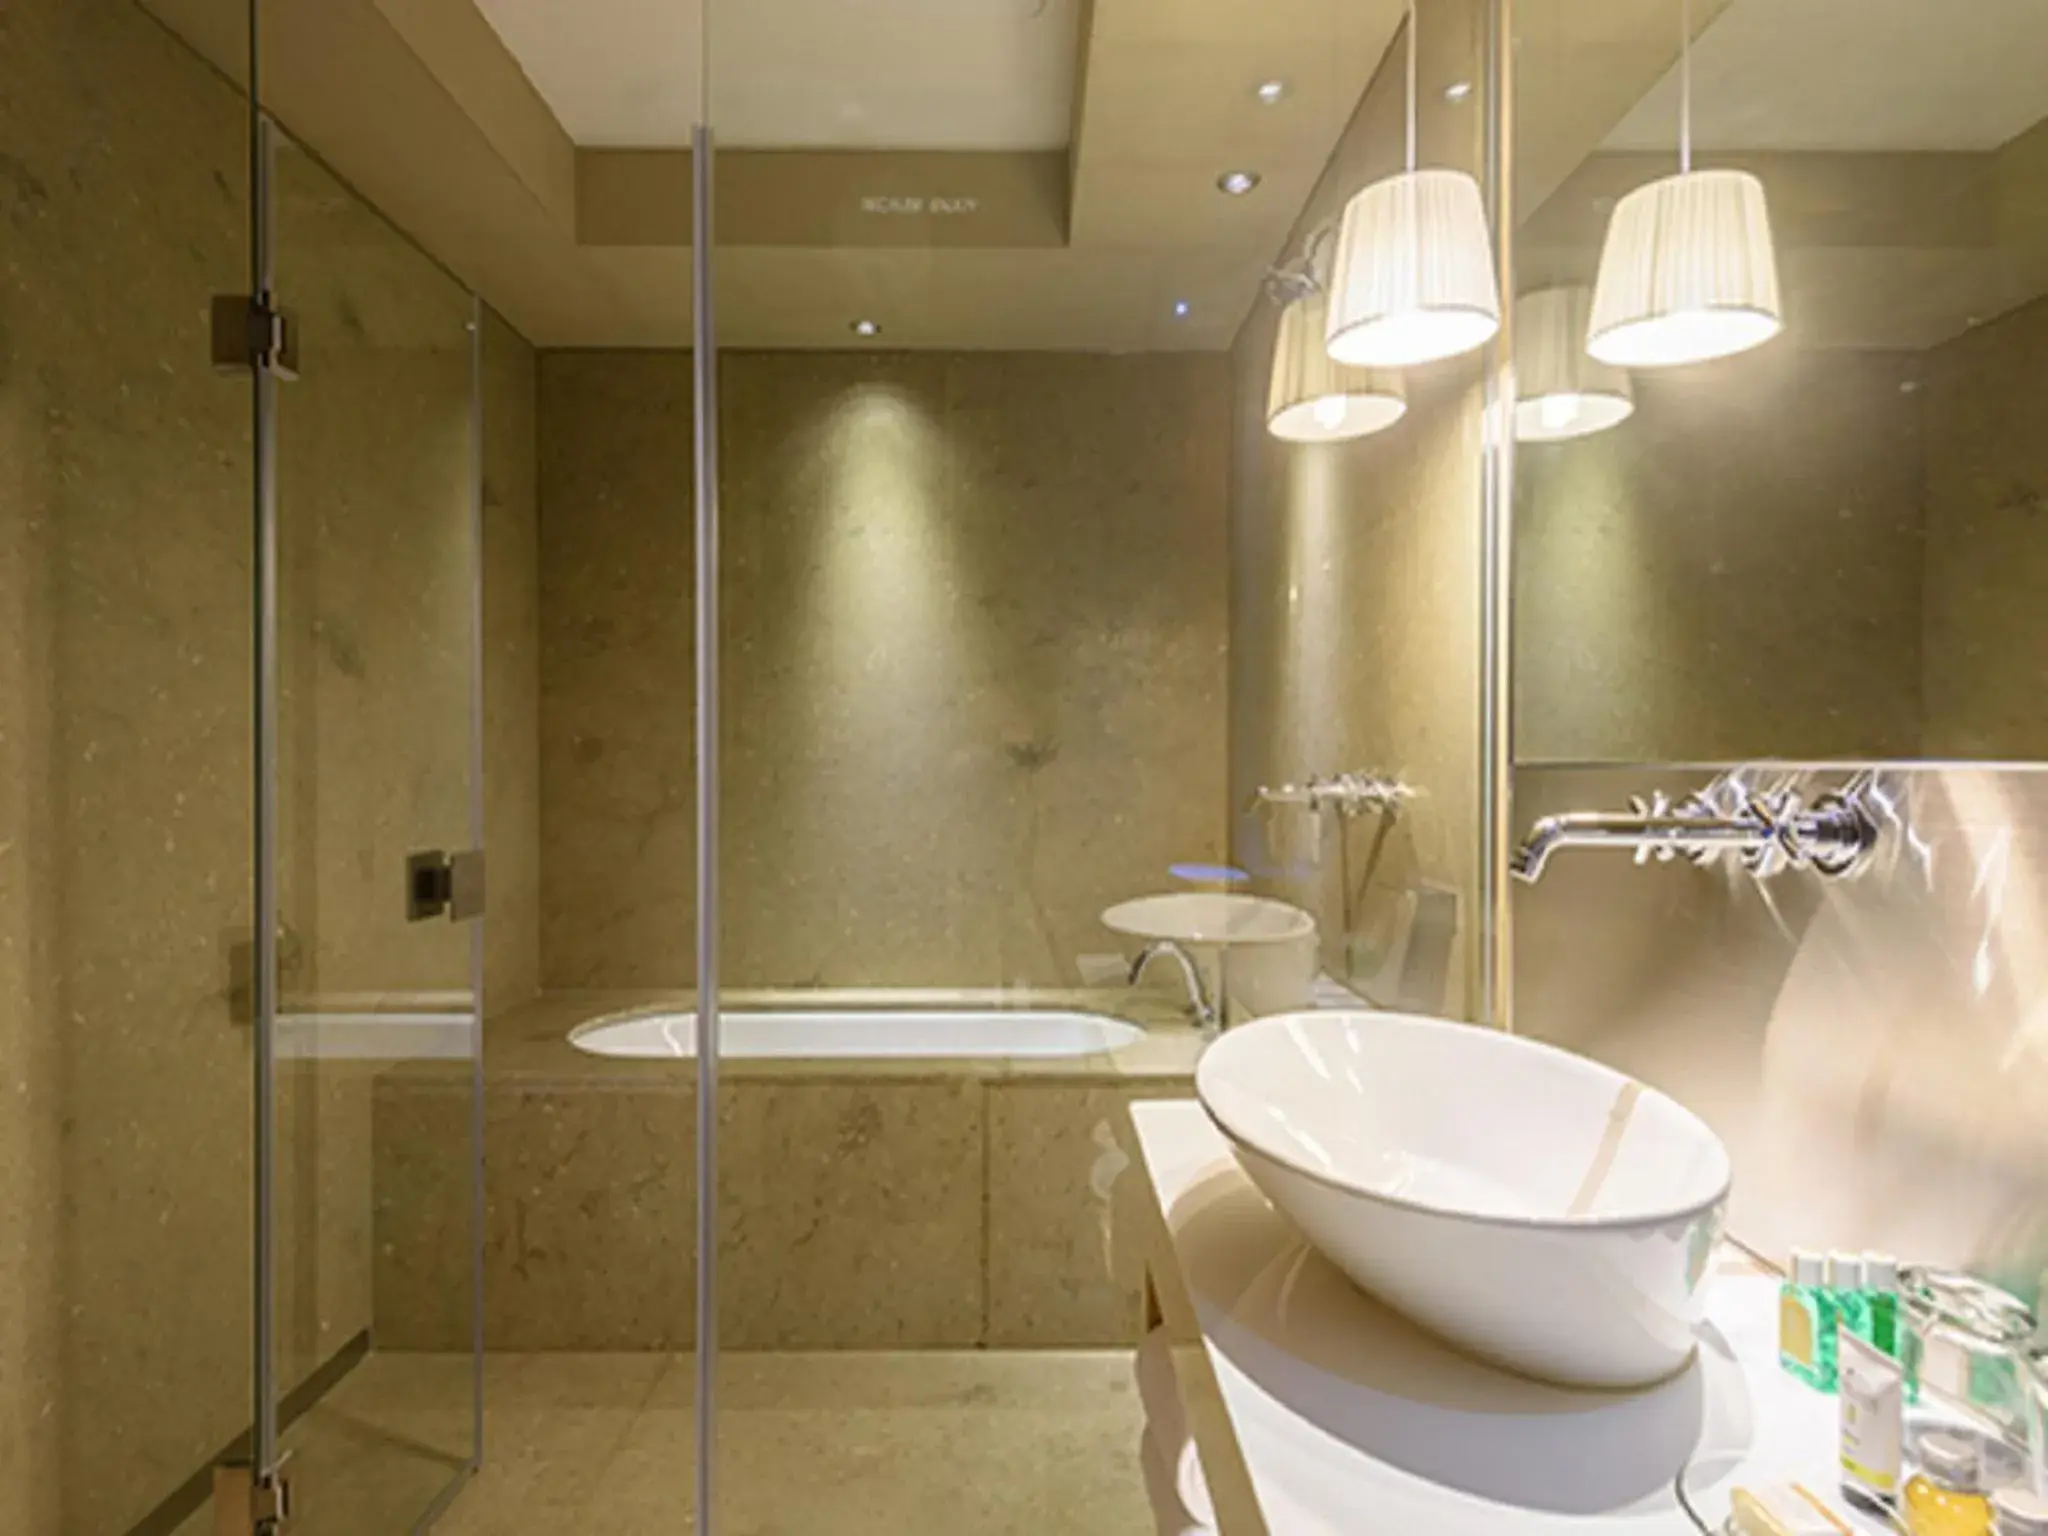 Bathroom in Inhouse Hotel Taichung